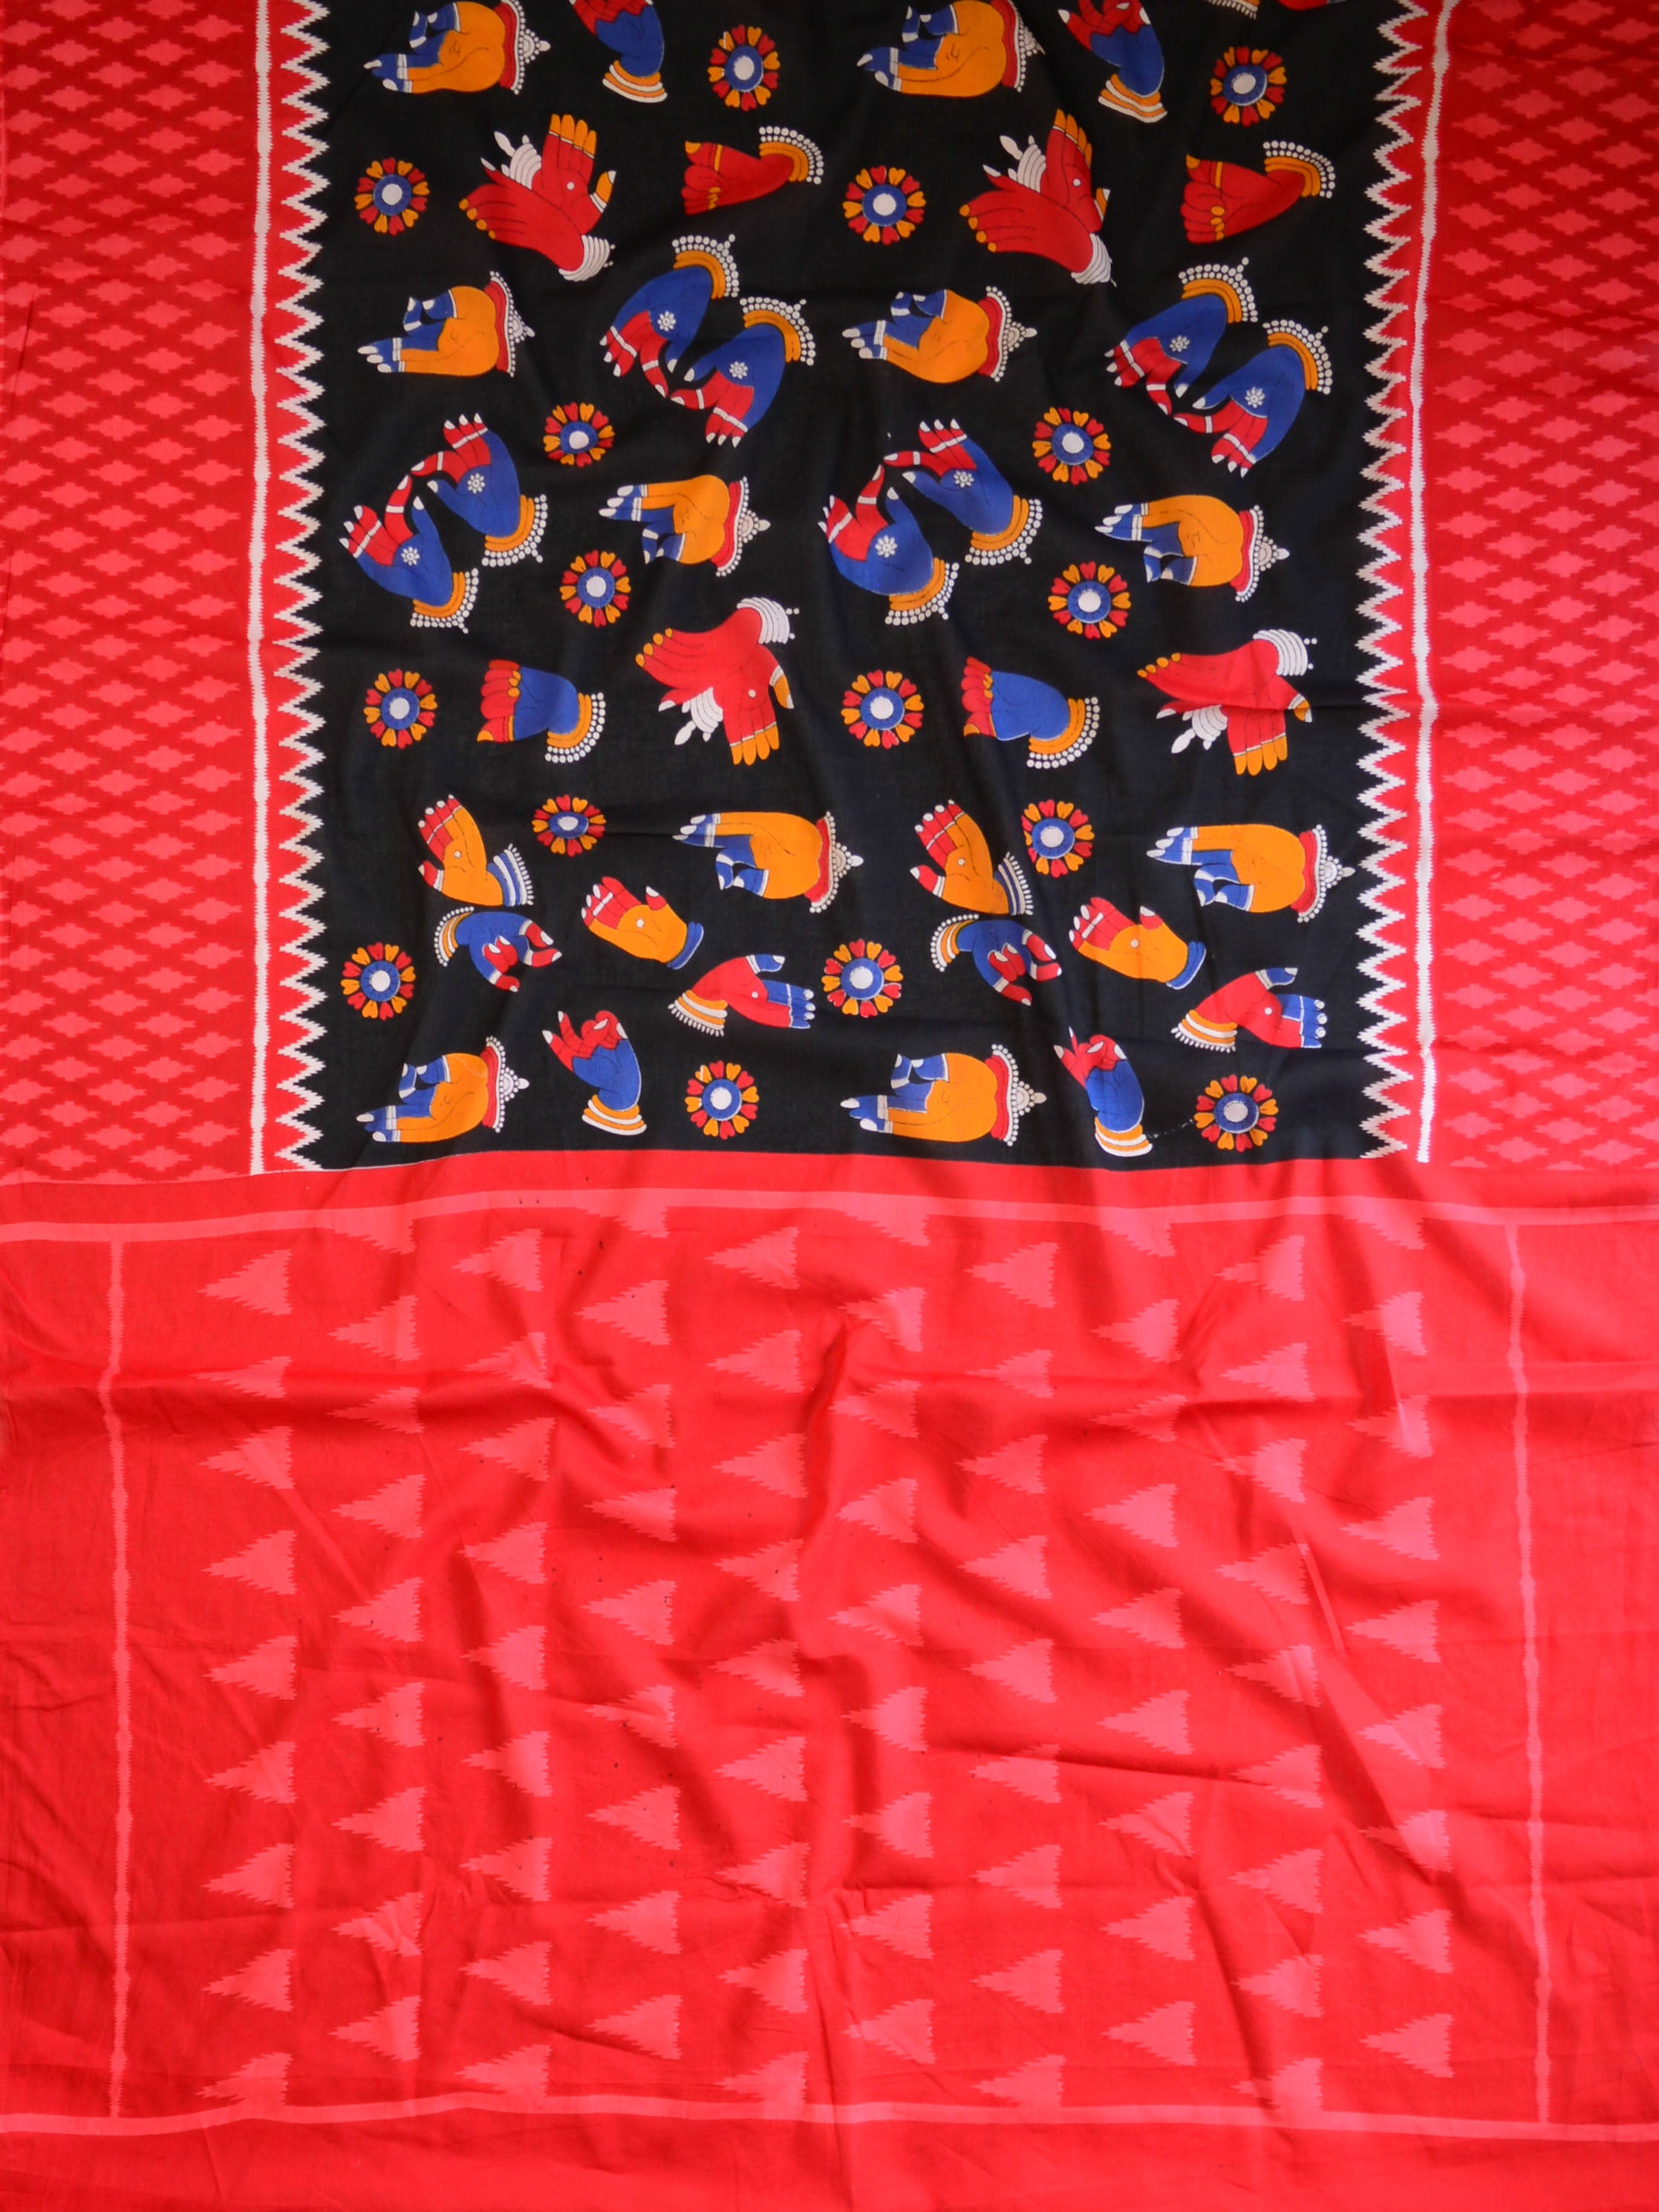 Handloom Mul Cotton Hand Print Saree-Black & Red